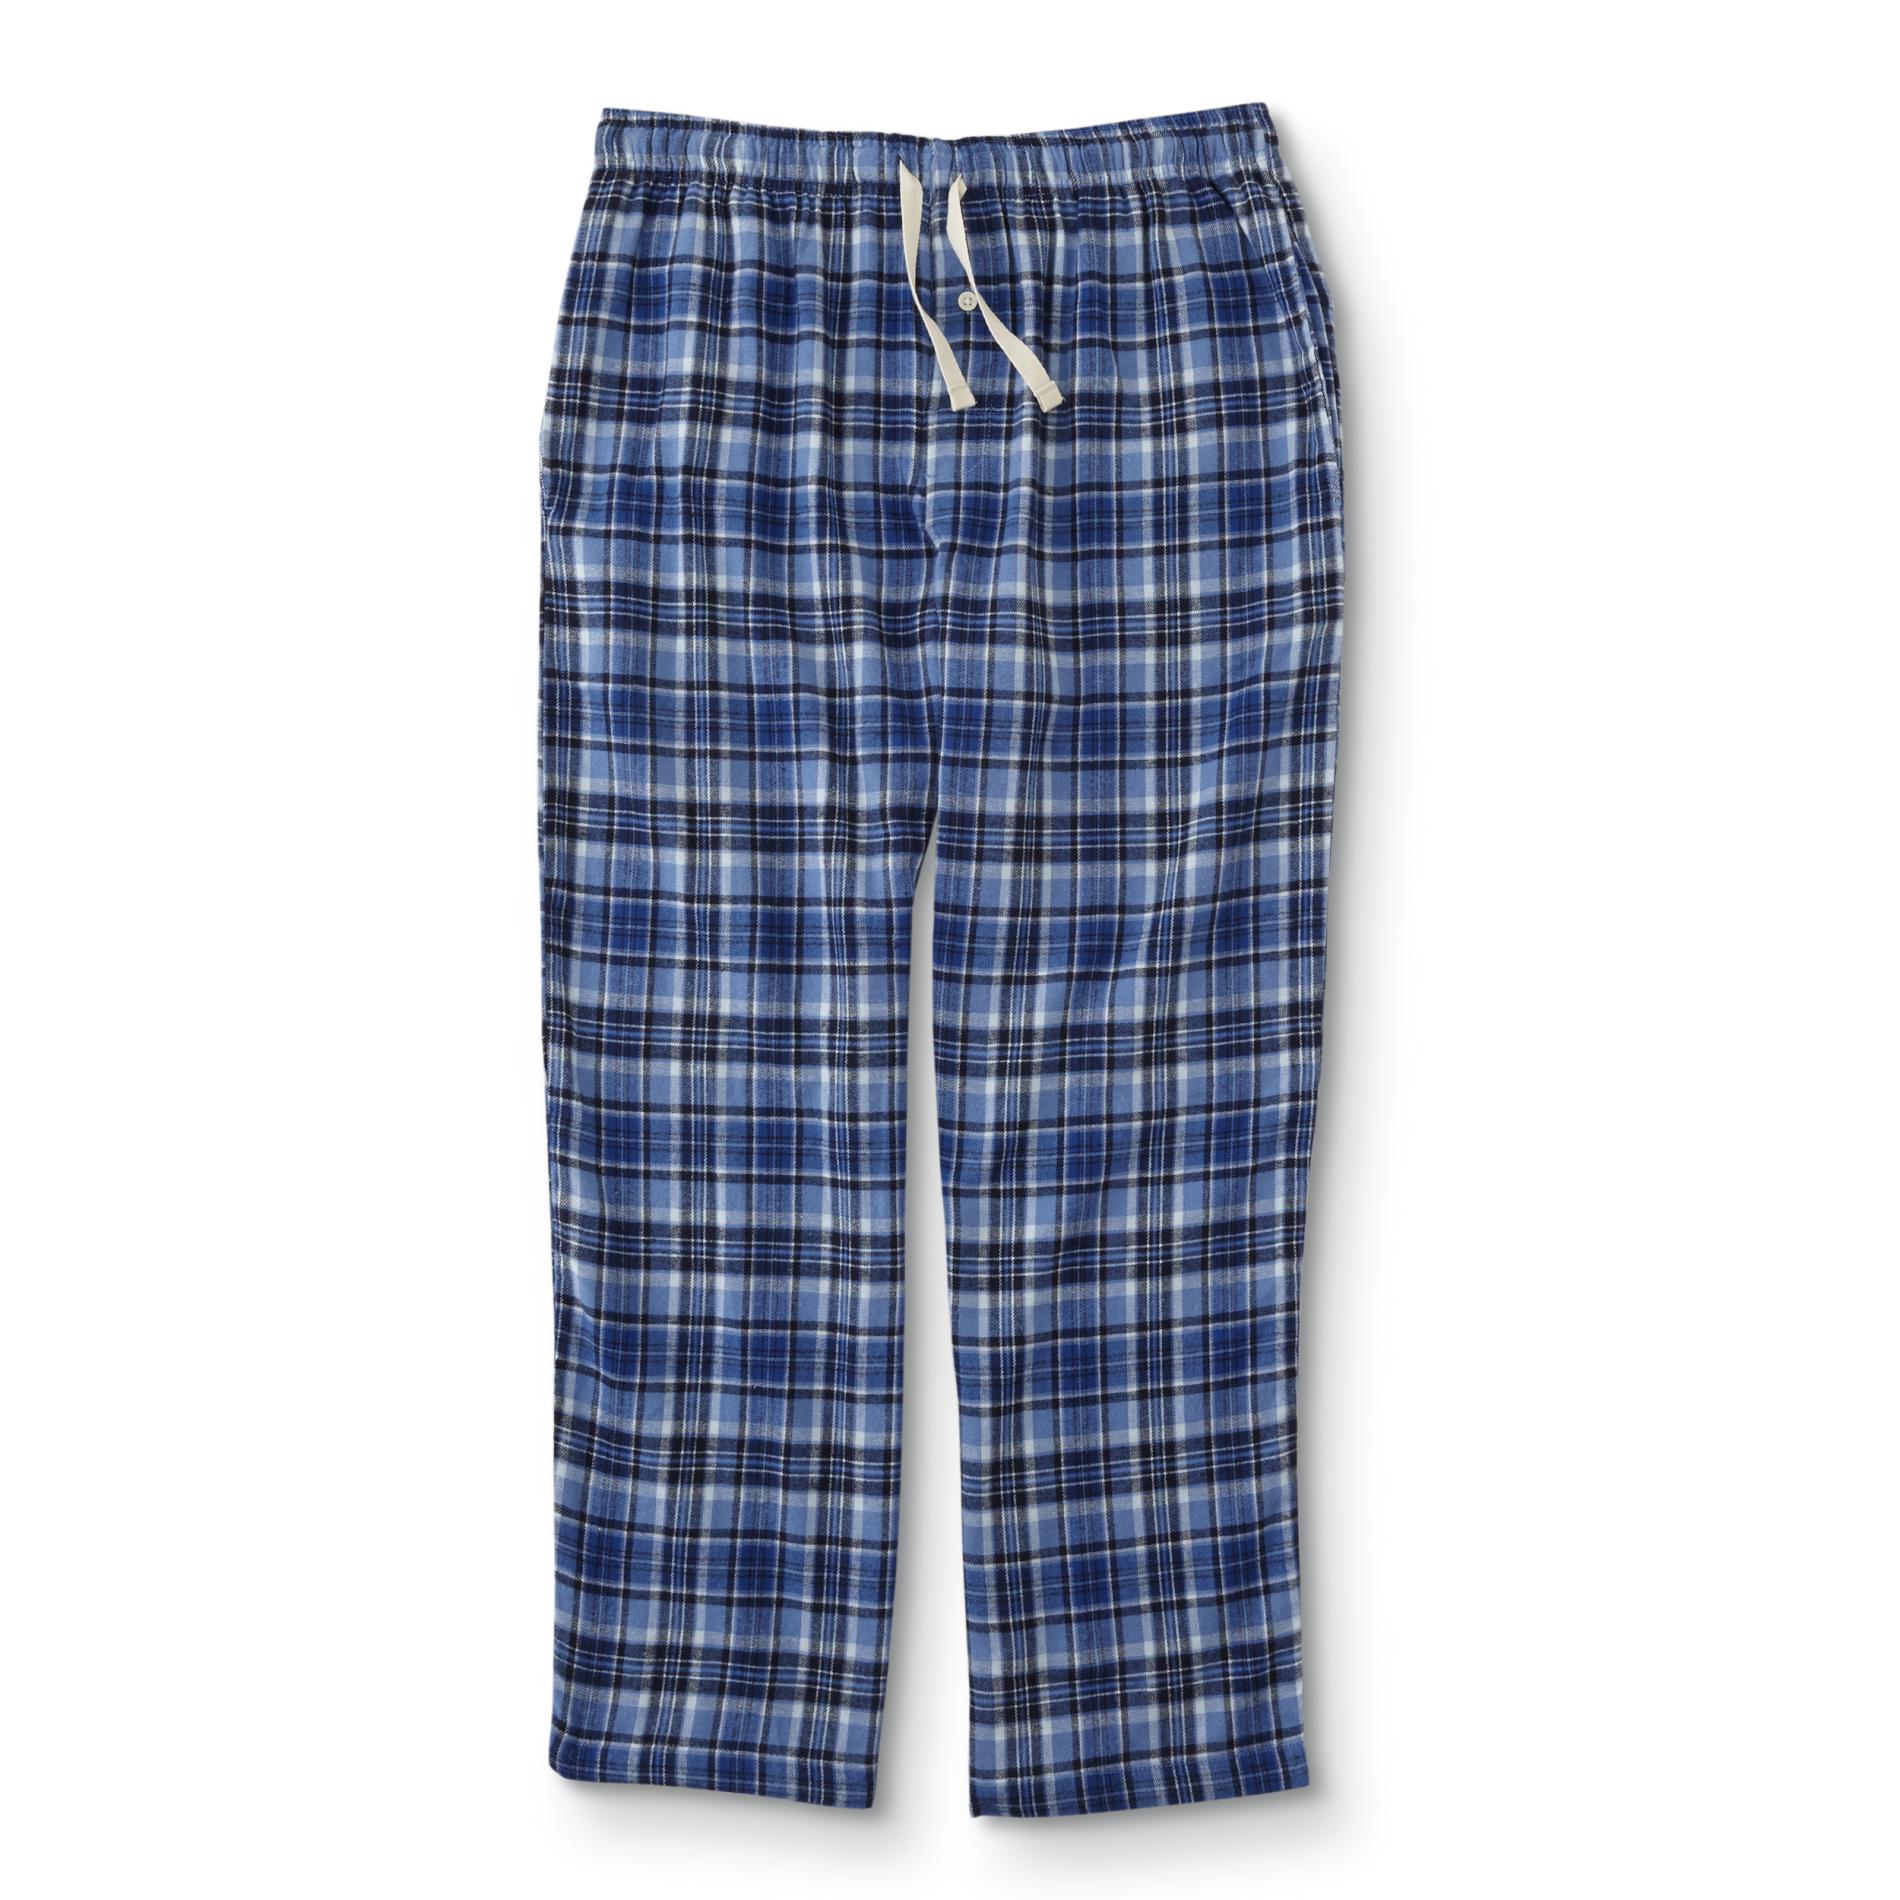 Outdoor Life Men's Flannel Pajama Pants - Plaid